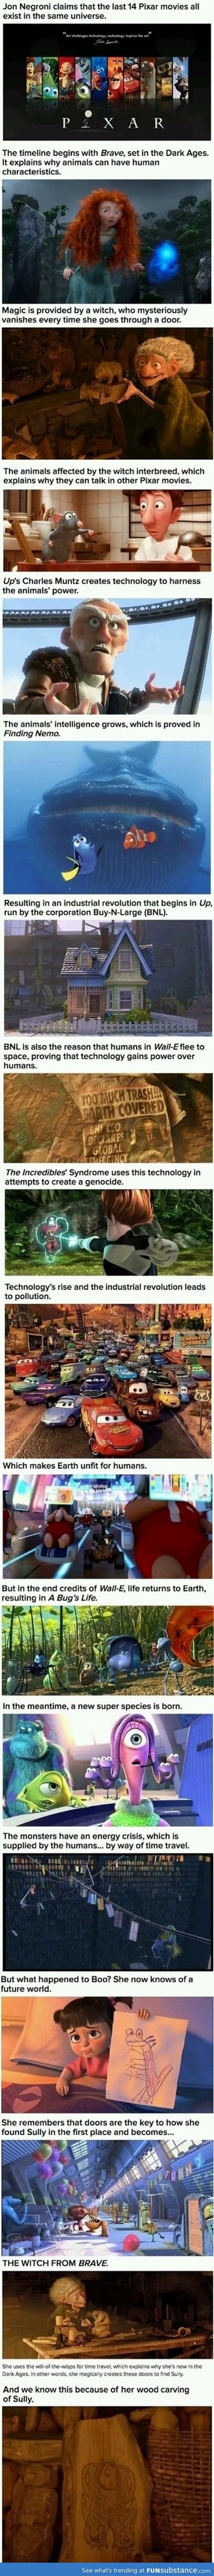 Pixar Movies Happen In The Same Universe